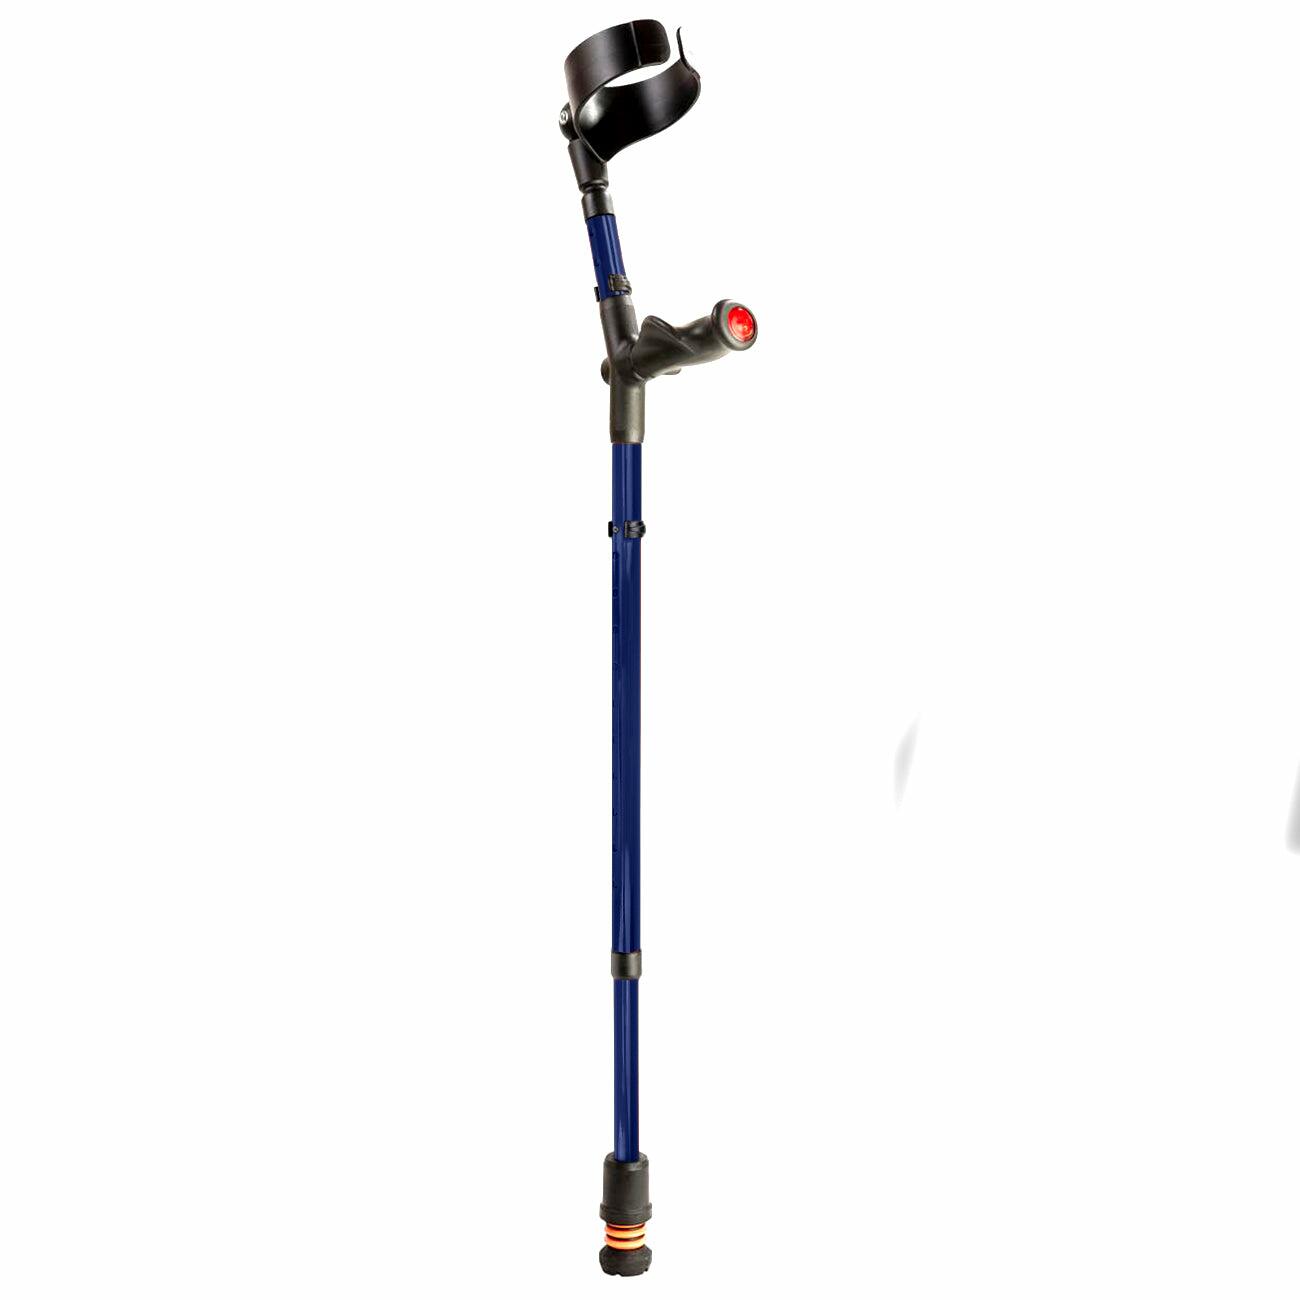 A single blue Flexyfoot Comfort Grip Double Adjustable Crutch